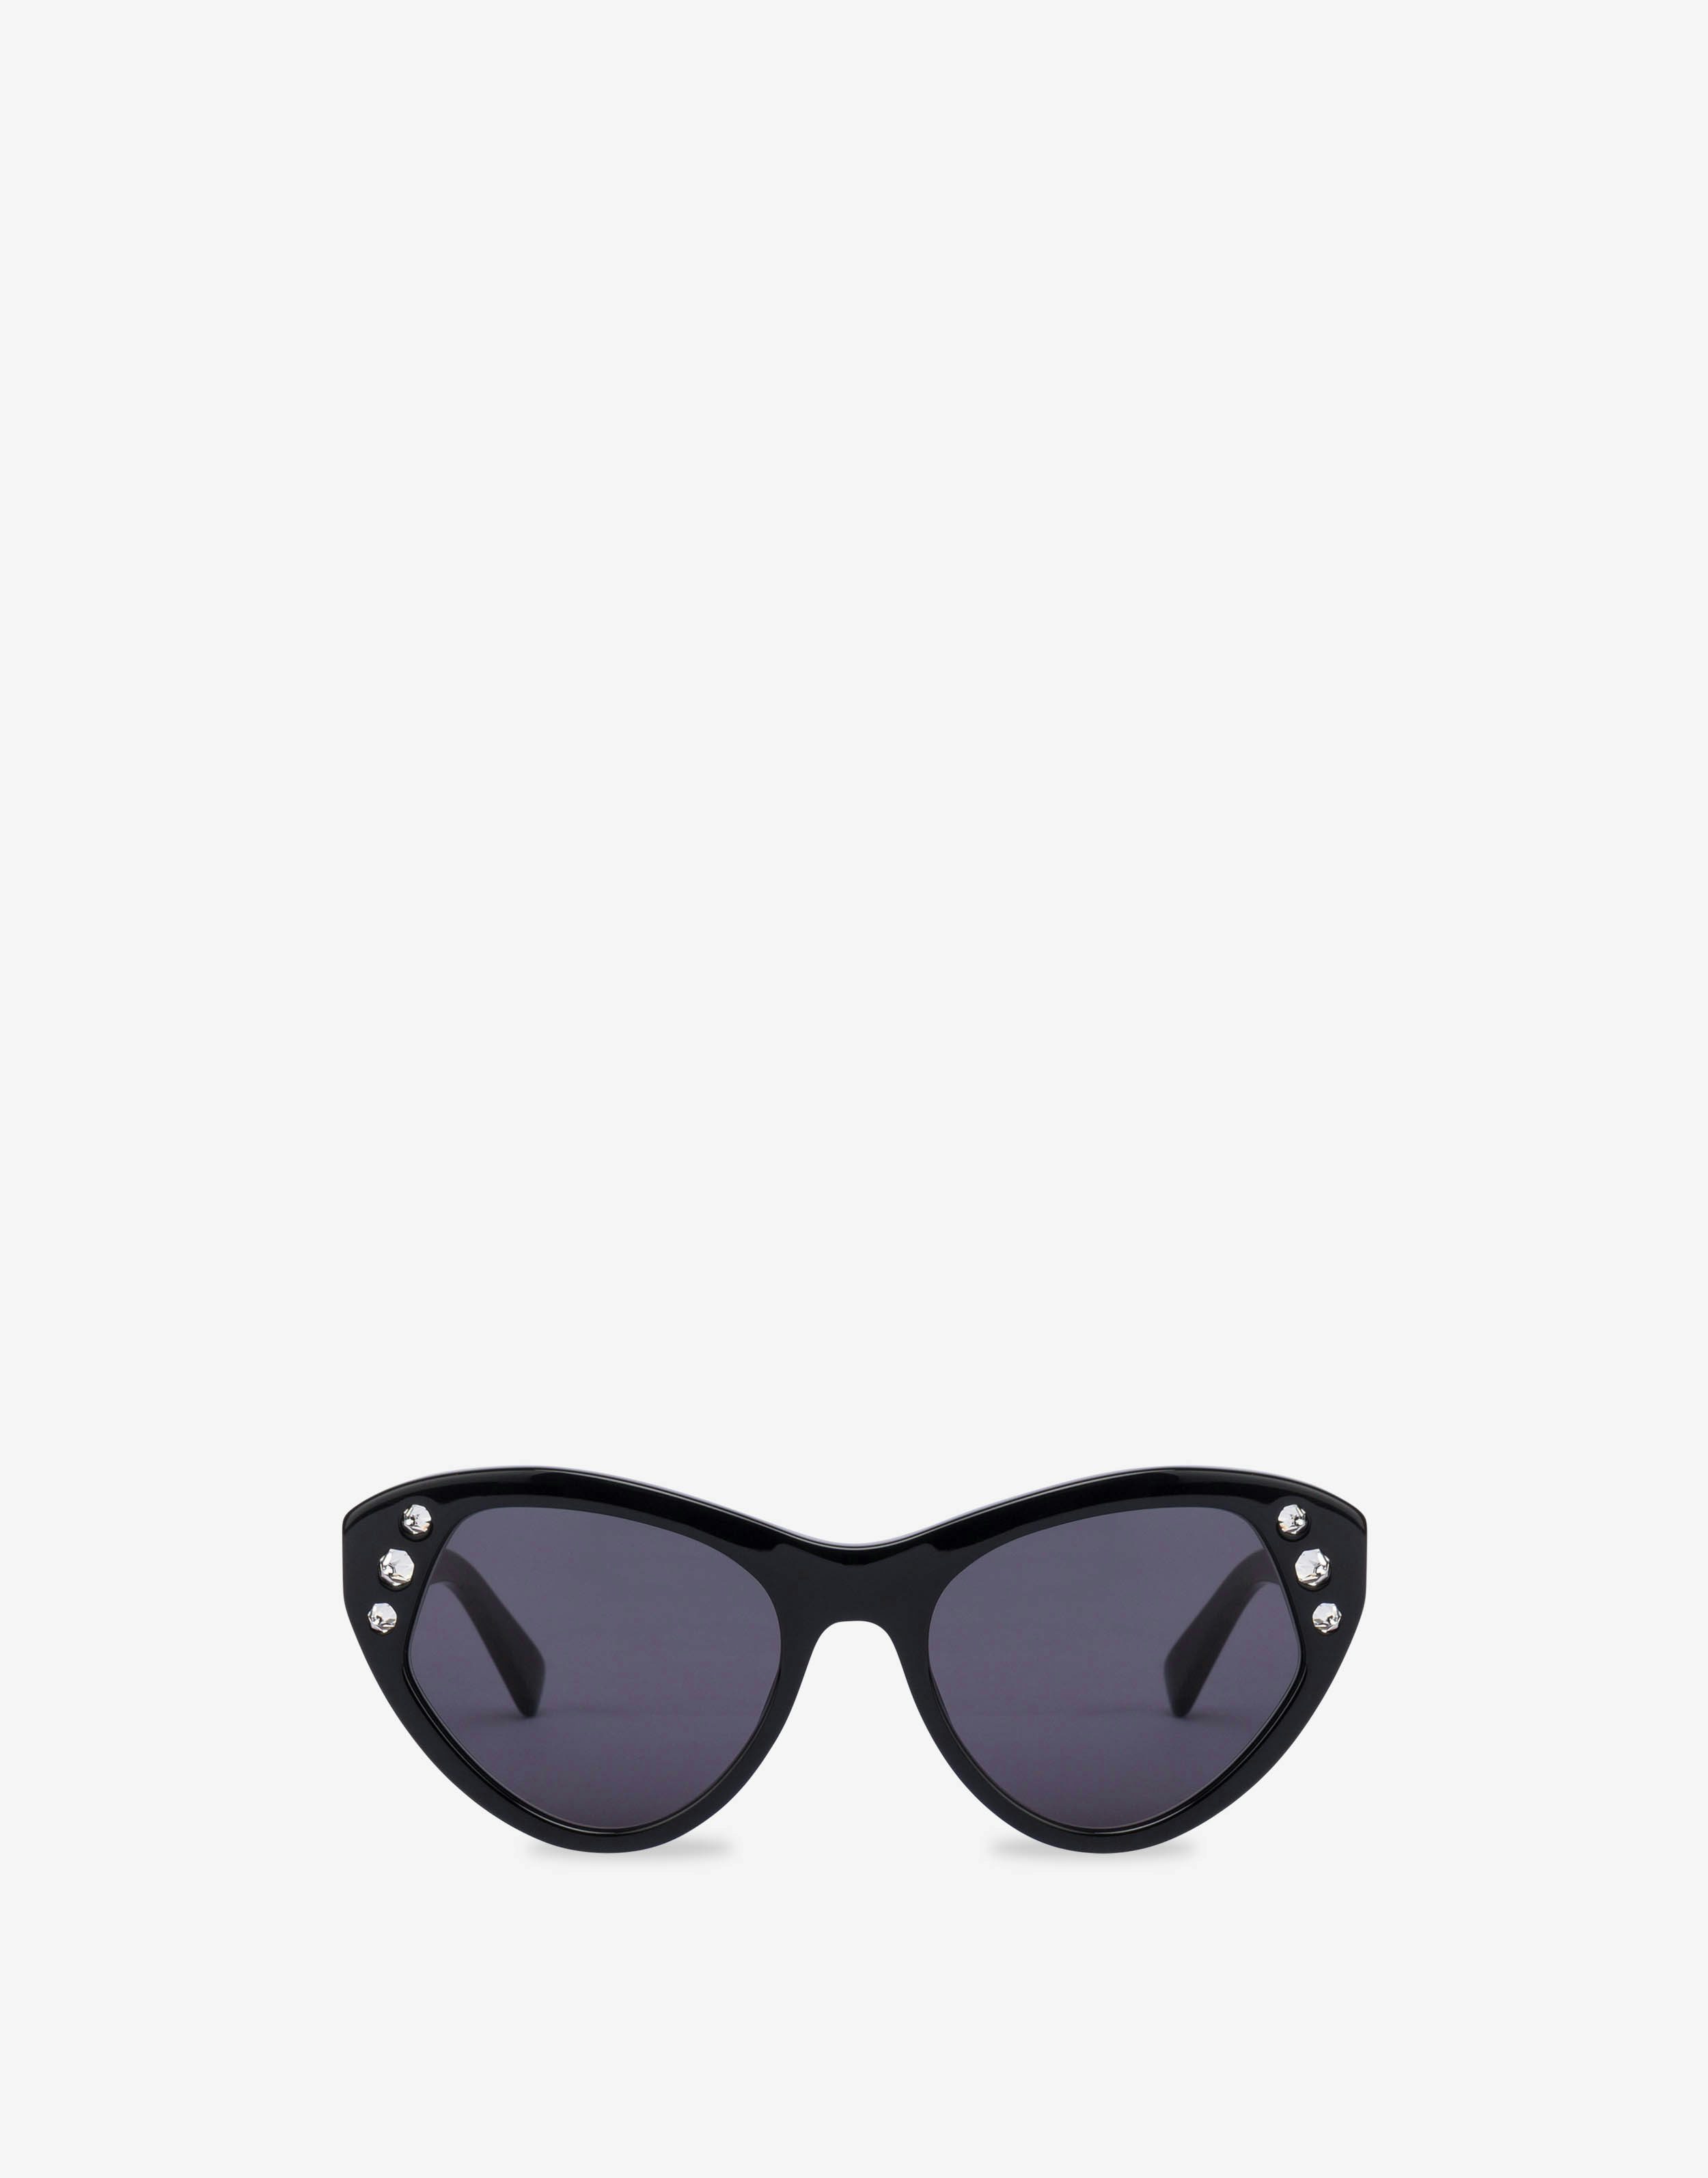 Moschino Black Cat Eye Logo Sunglasses Factory Sale | website.jkuat.ac.ke